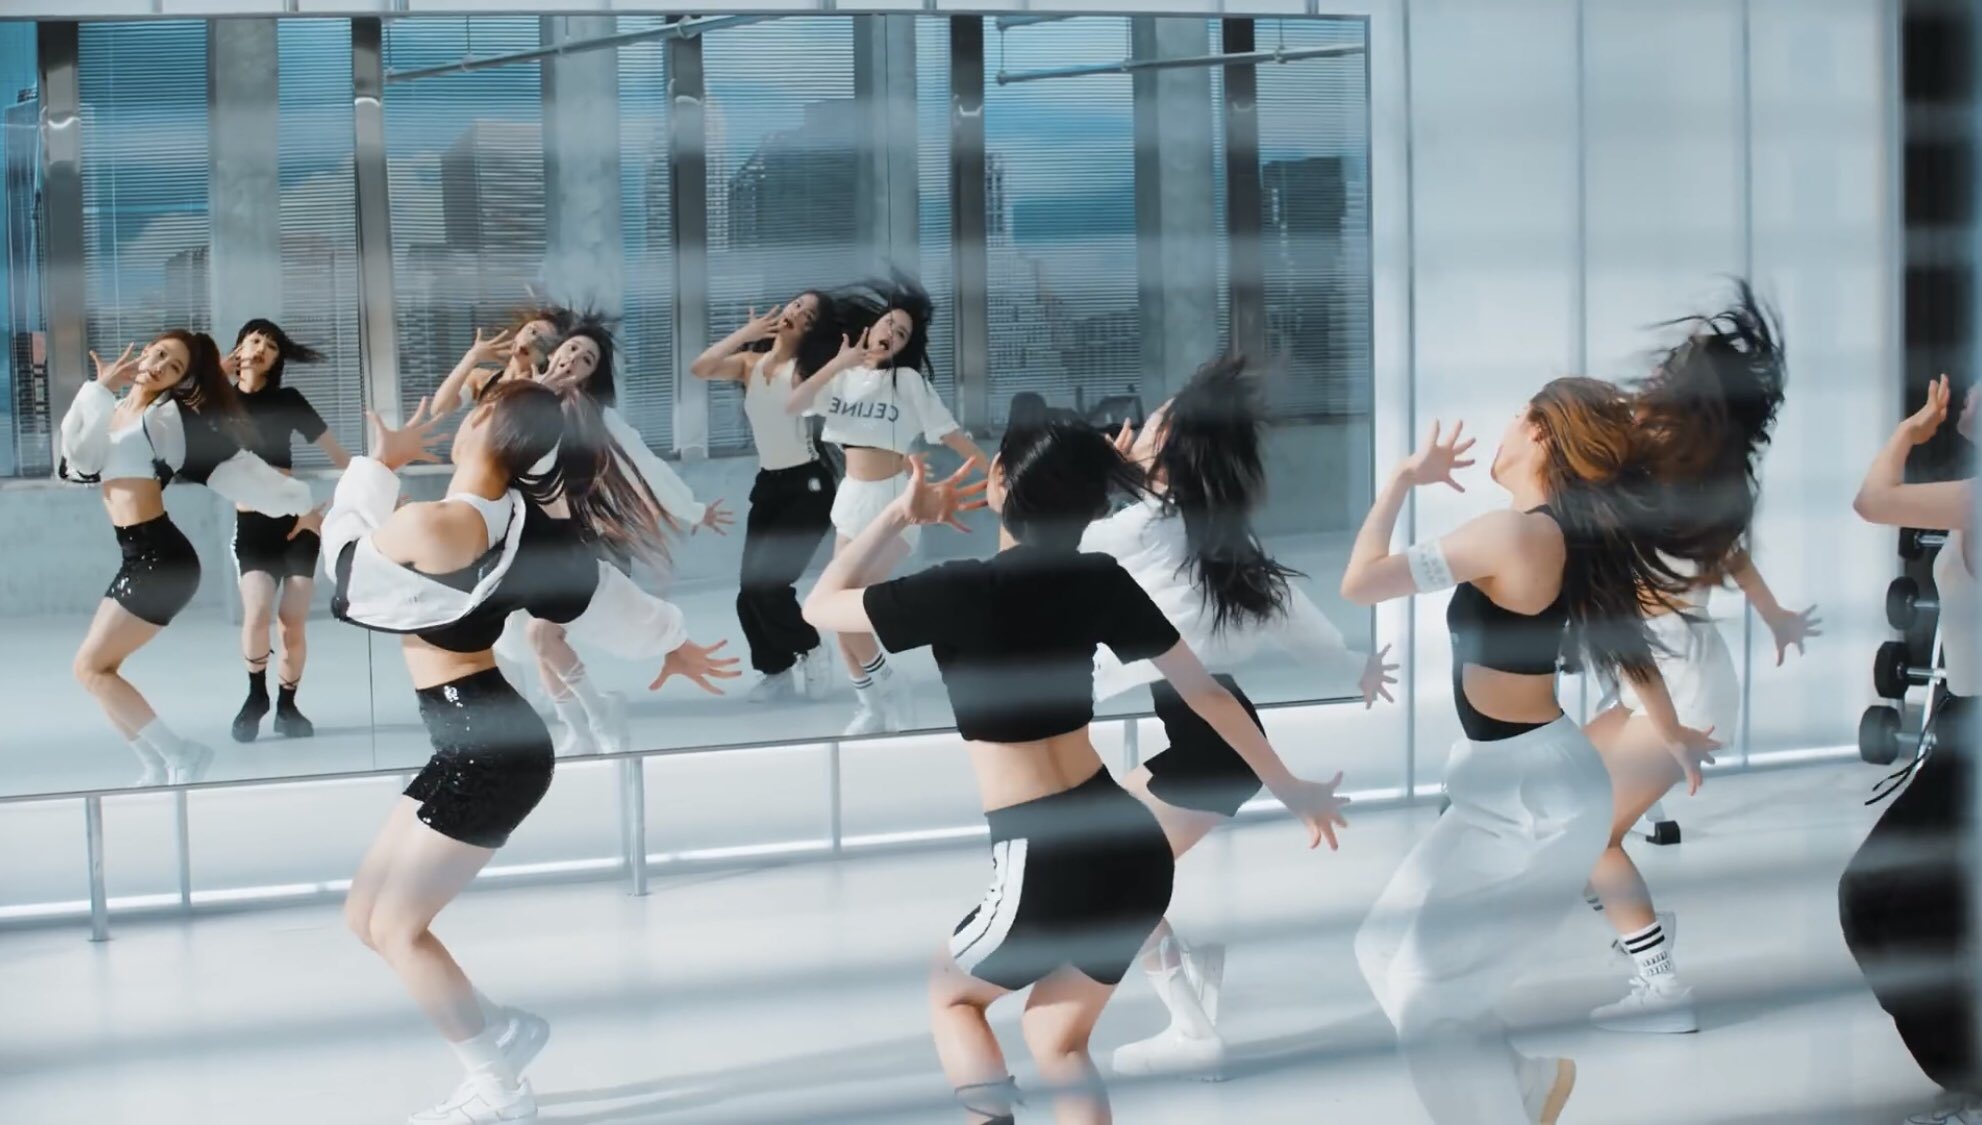 Le Sserafim Rilis Teaser Pertama Untuk Video Musik Fearless Koreanindo